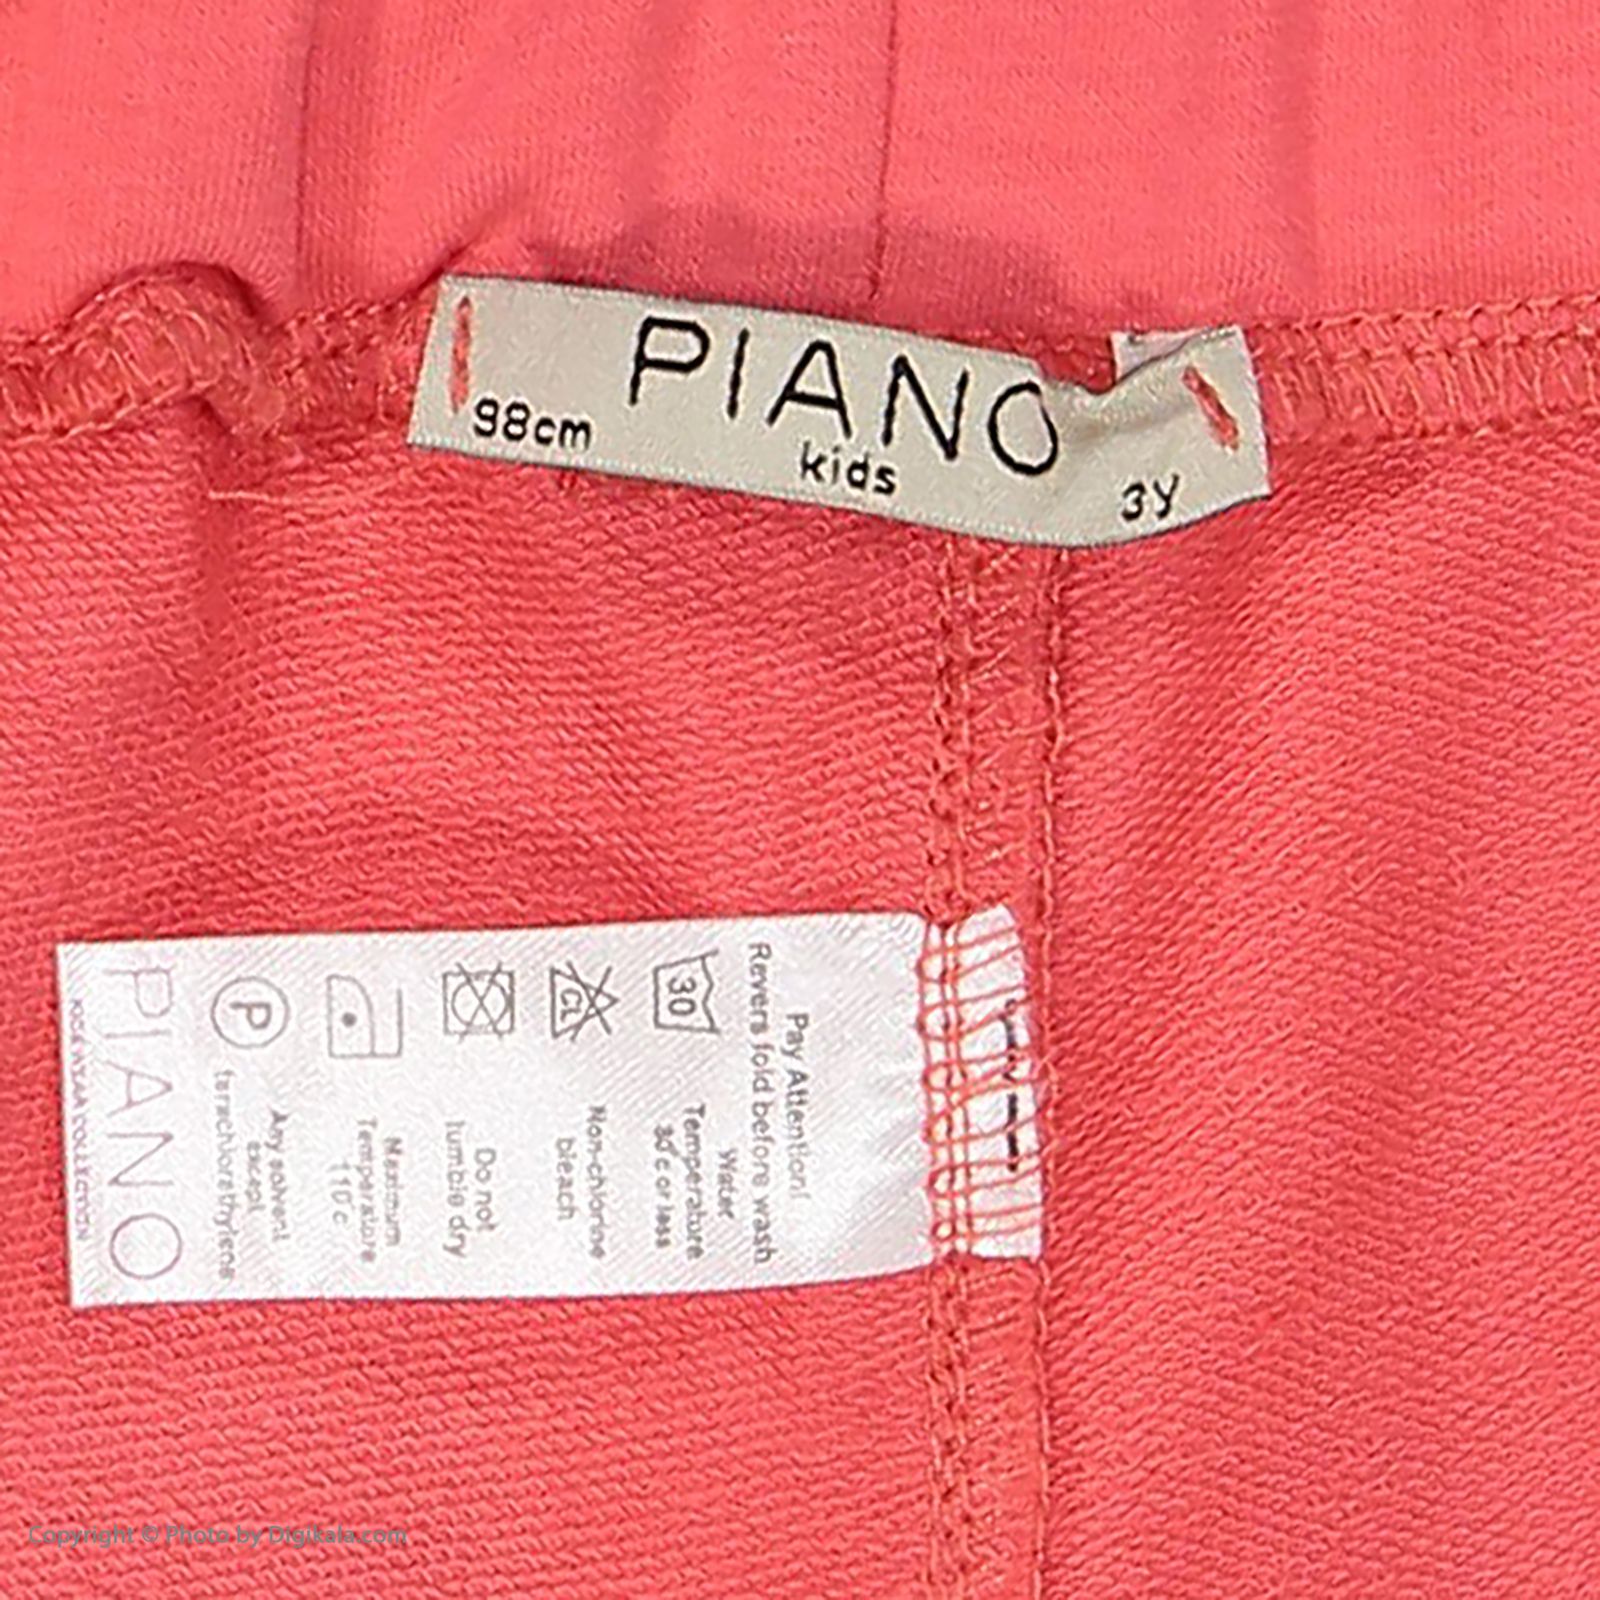 شلوارک دخترانه پیانو مدل 10132-22 -  - 5